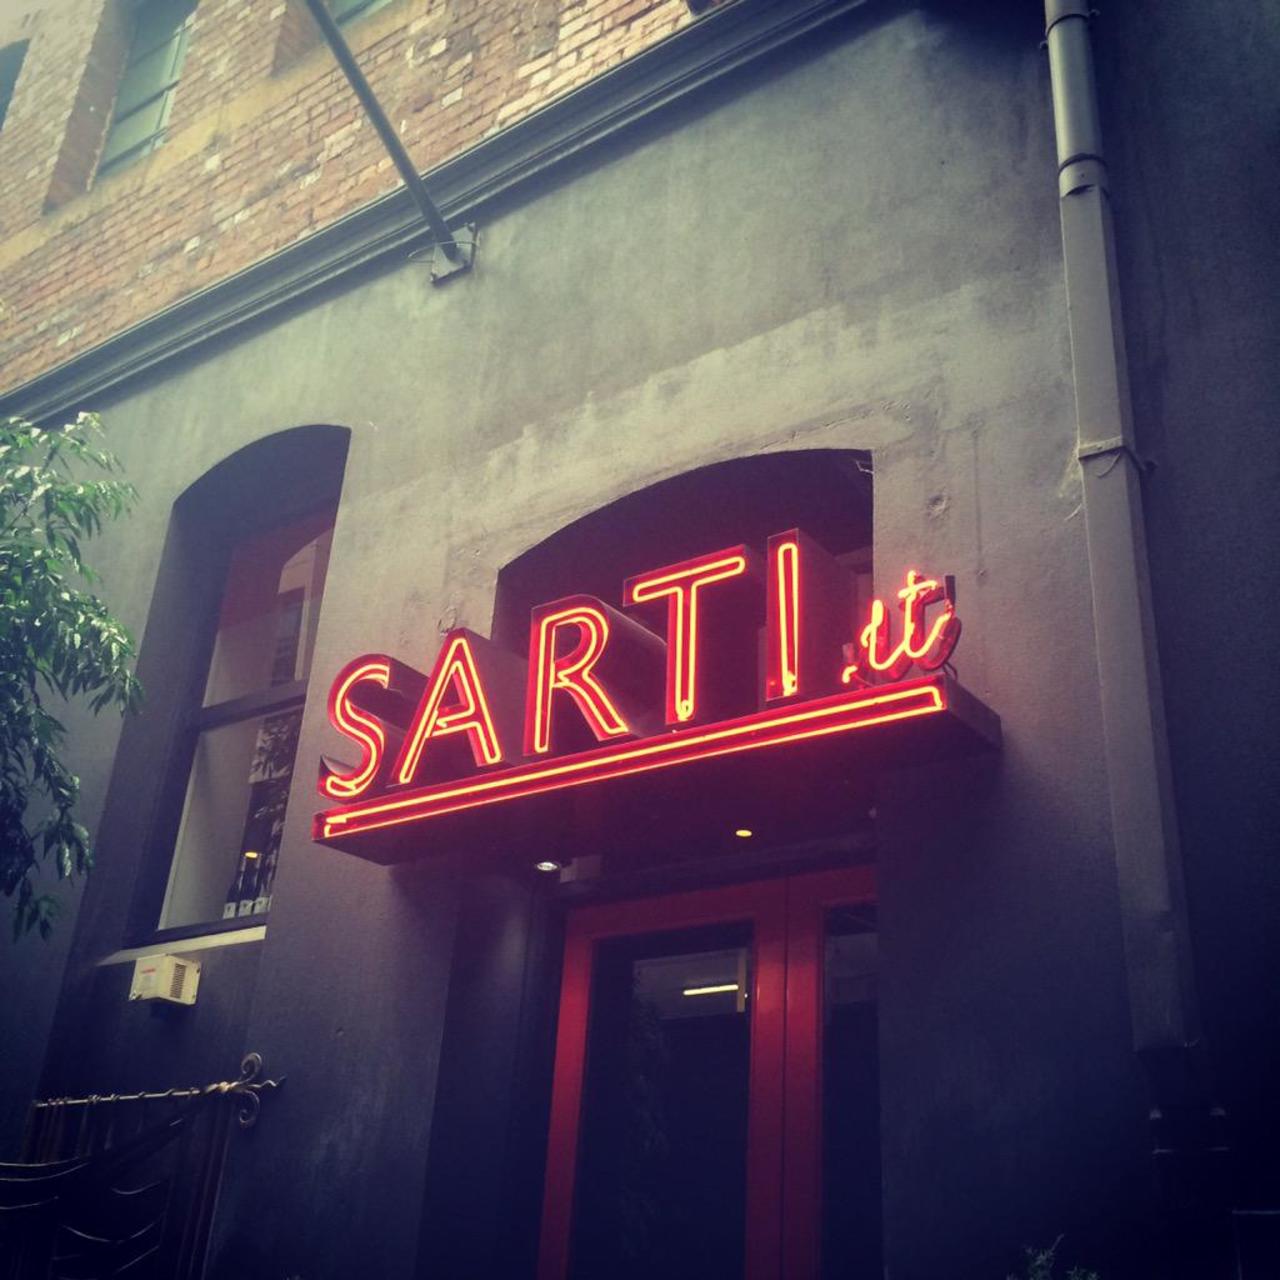 Sarti Restaurant in #melbourne #city #neon #sign #lightart  http://t.co/eTUEBsI7dk